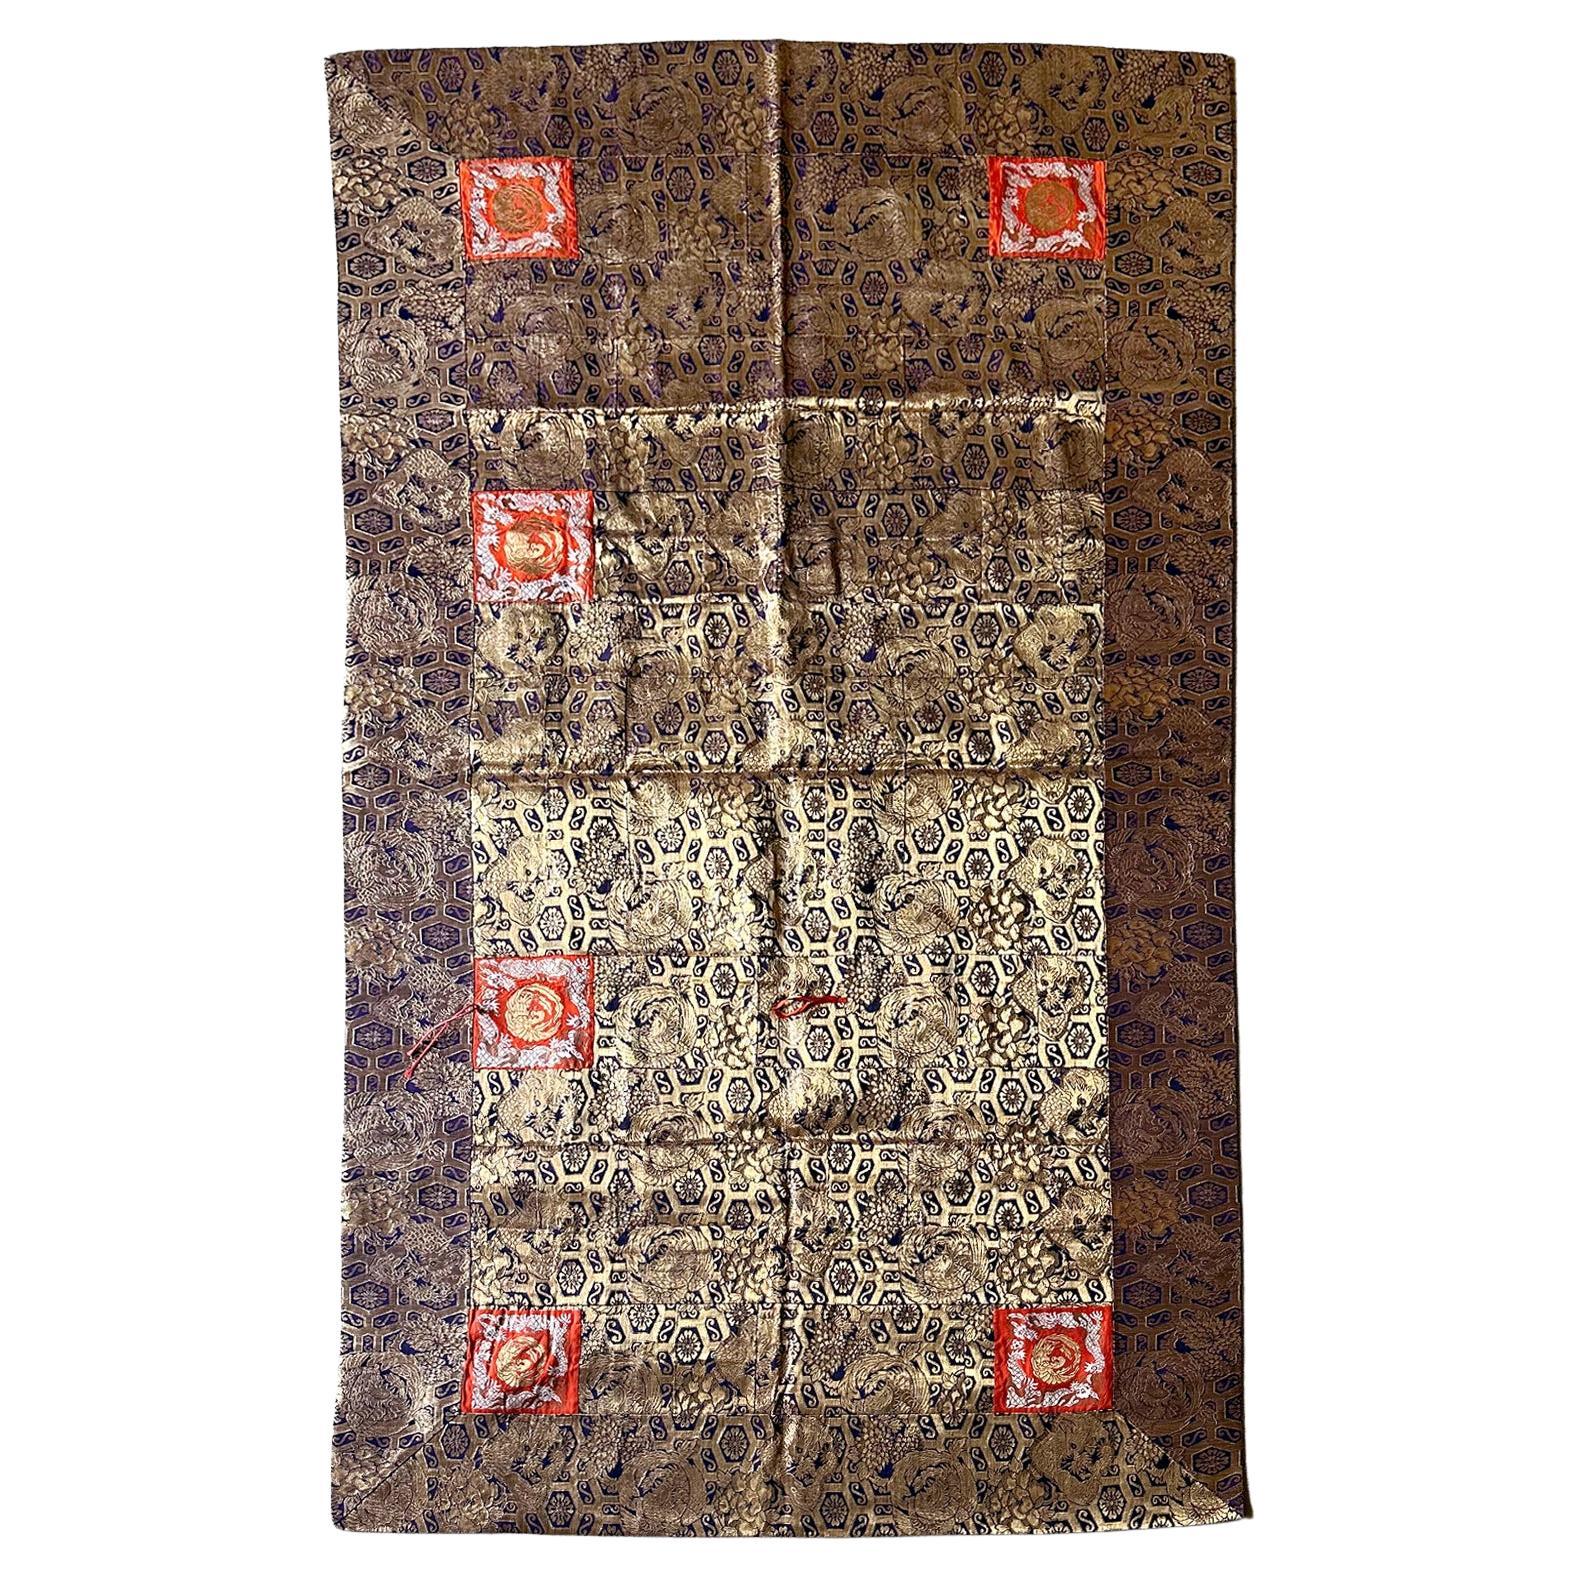 Prächtiger antiker japanischer gewebter Brokat Kesa Monk's Robe Meiji-Periode aus der japanischen Keramik